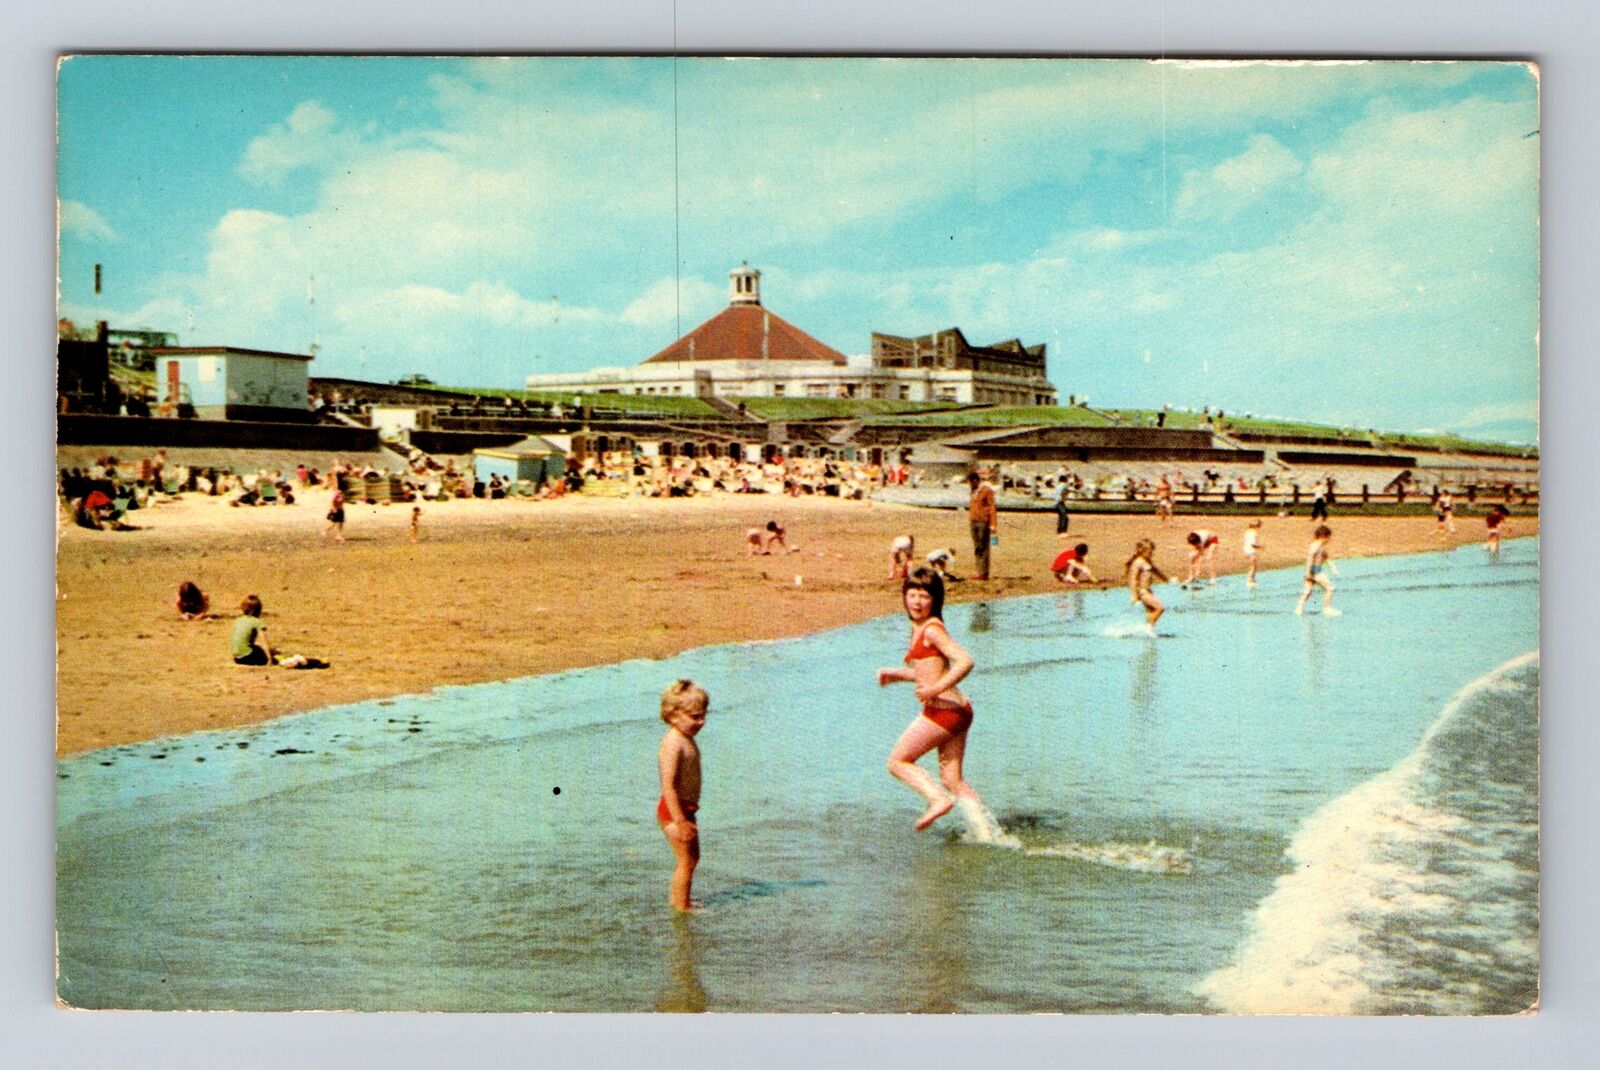 Aberdeen-Scotland, The Beach, Antique, Vintage Travel Souvenir History Postcard